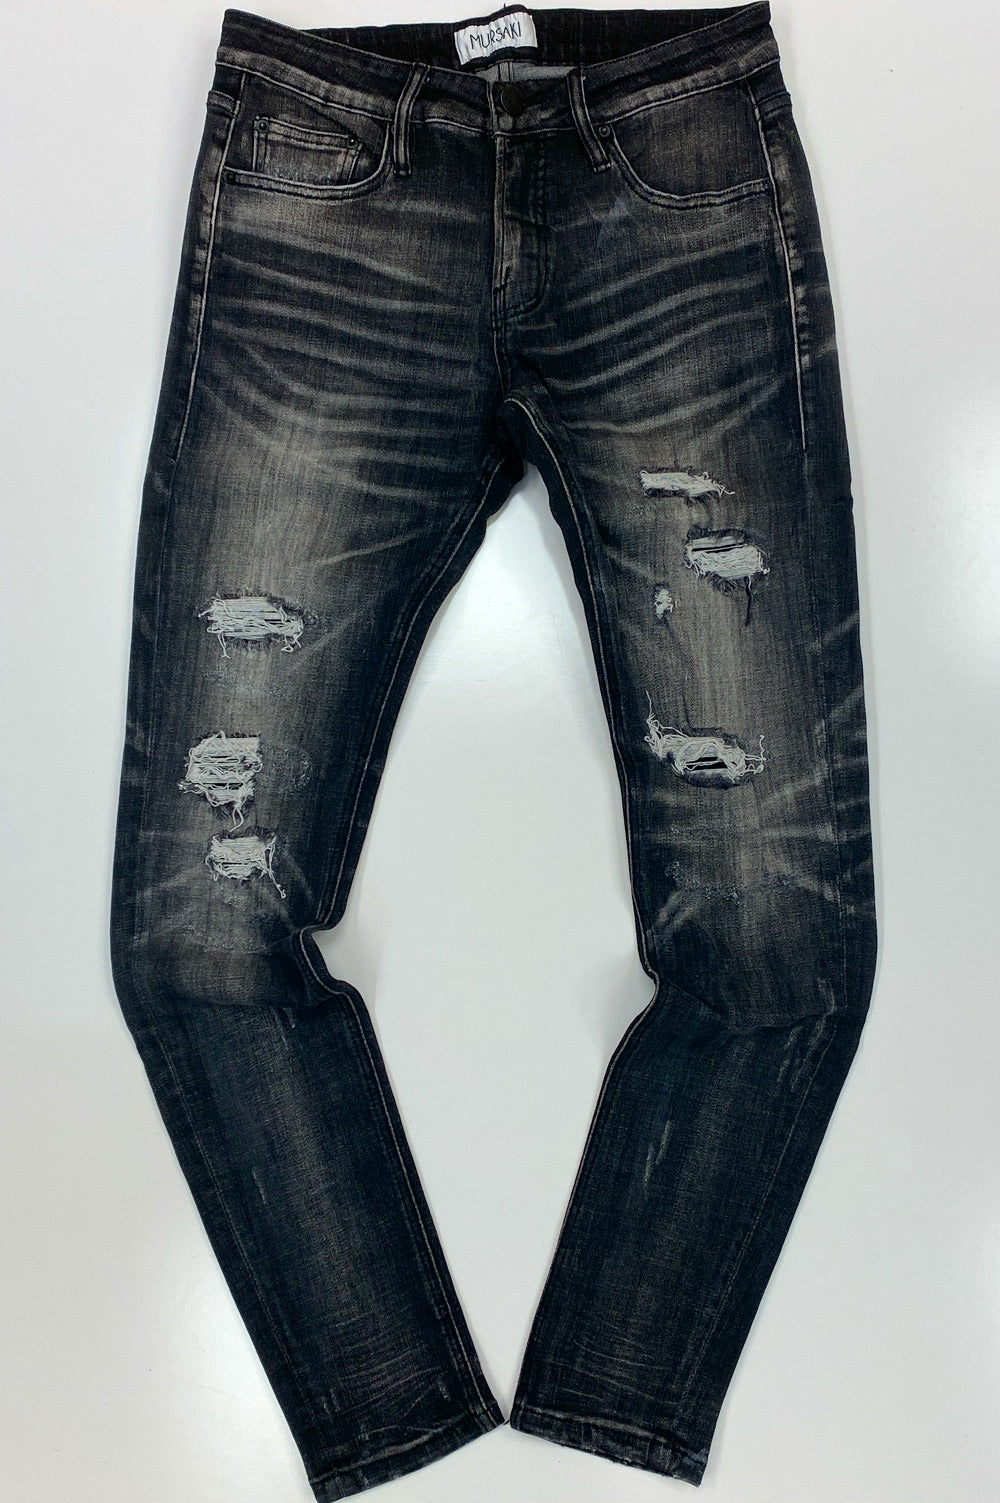 Mursaki- maverick jeans